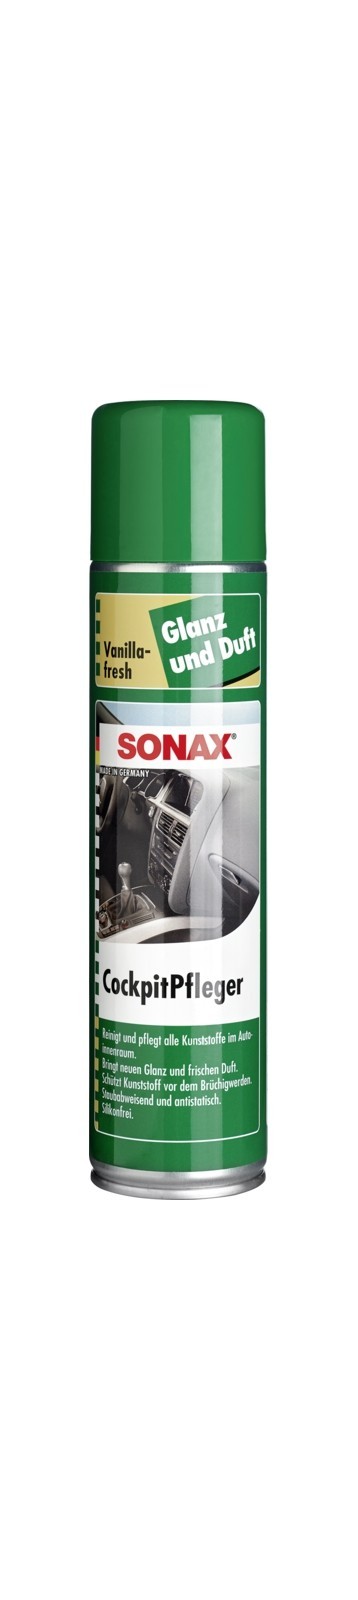 SONAX Cockpit-Pfleger Vanilla-fresh (400 ml), Art.-Nr. 03423000